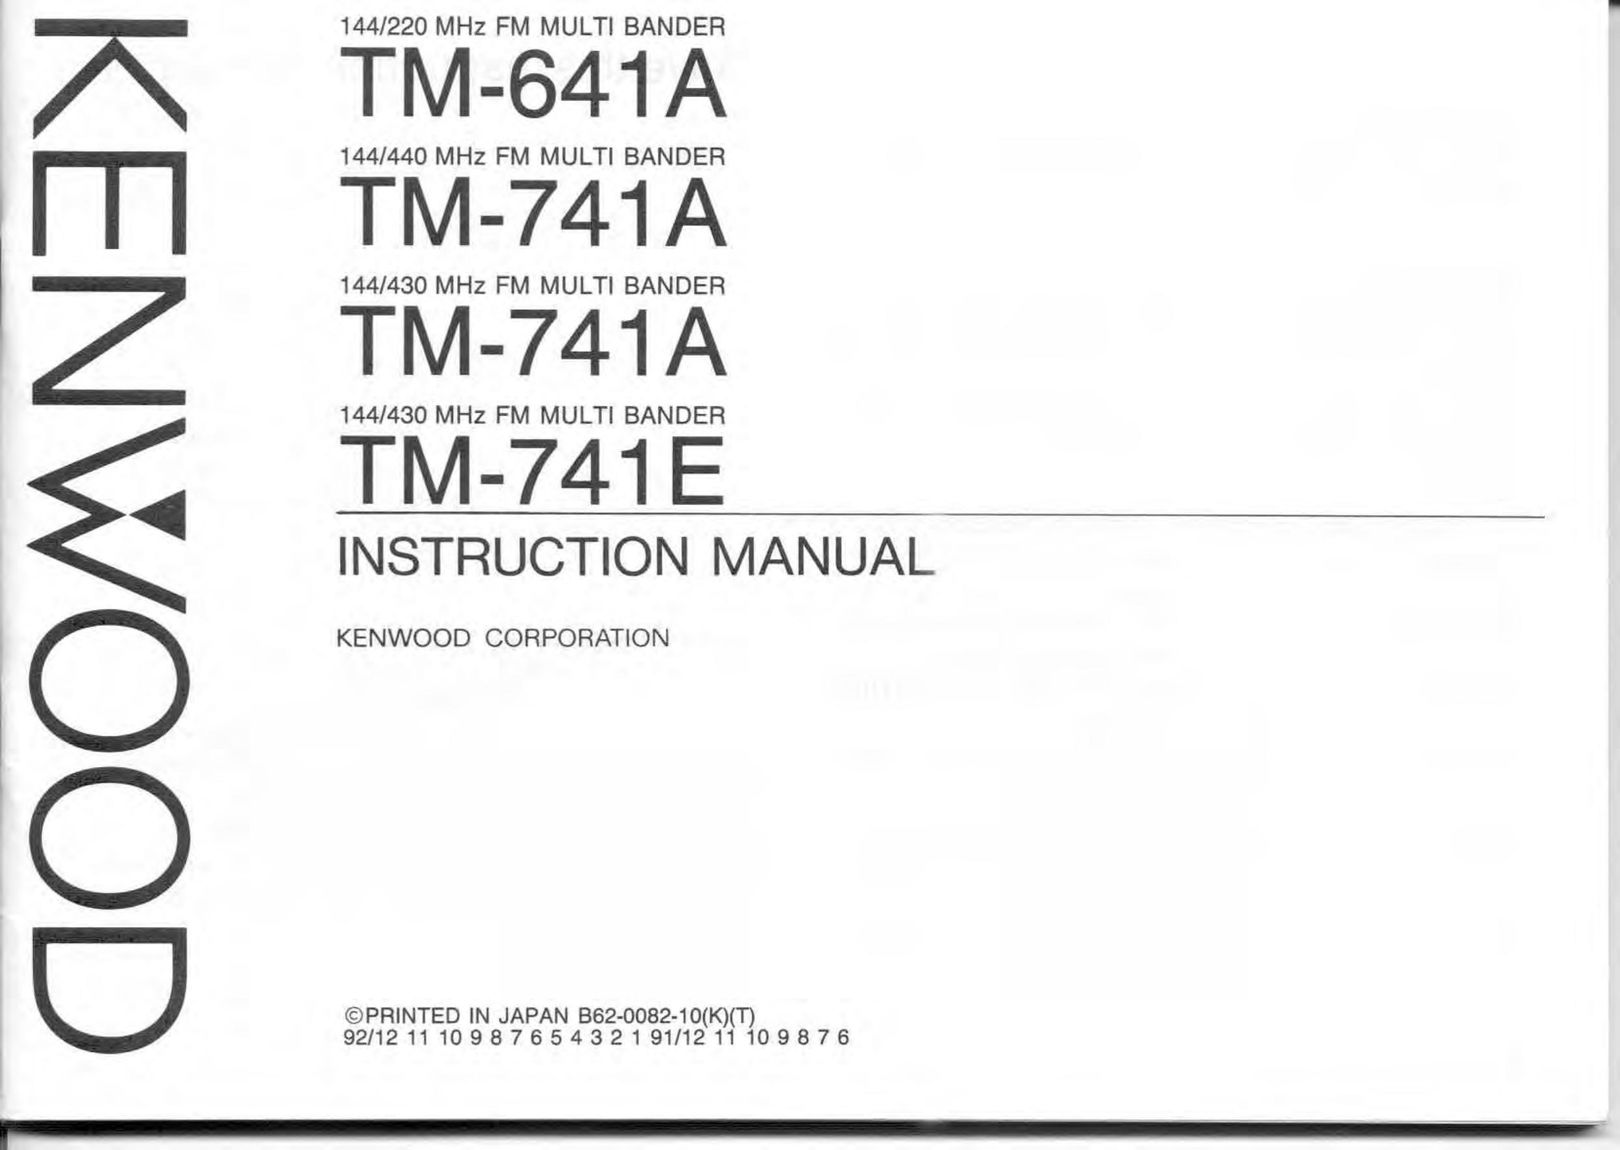 Kenwood TM-641A Welder User Manual